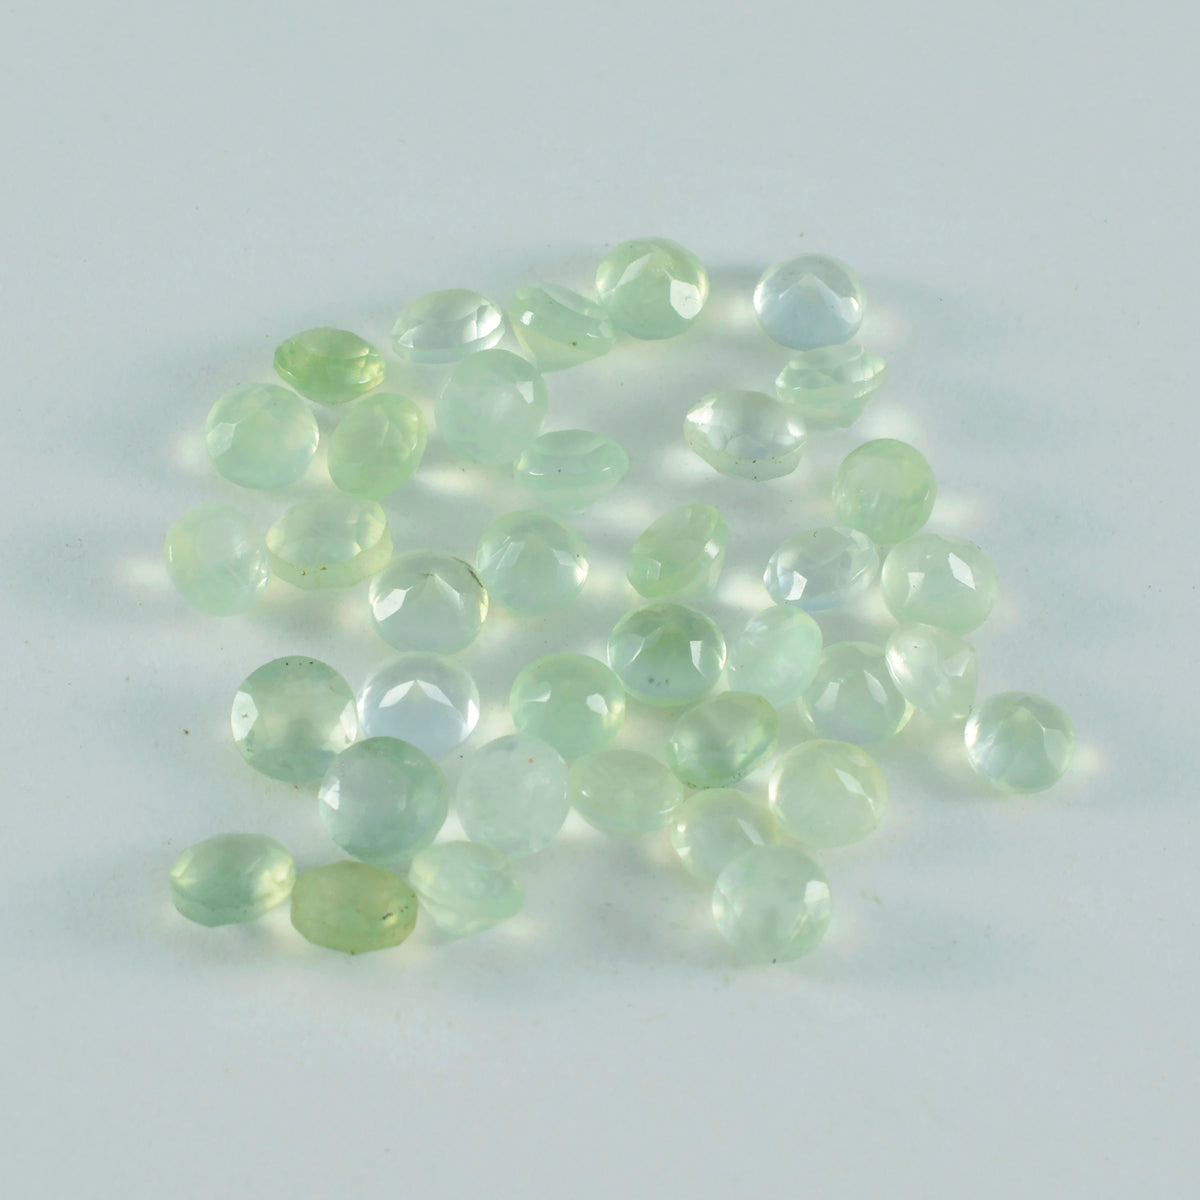 Riyogems 1PC Green Prehnite Faceted 3x3 mm Round Shape awesome Quality Gemstone